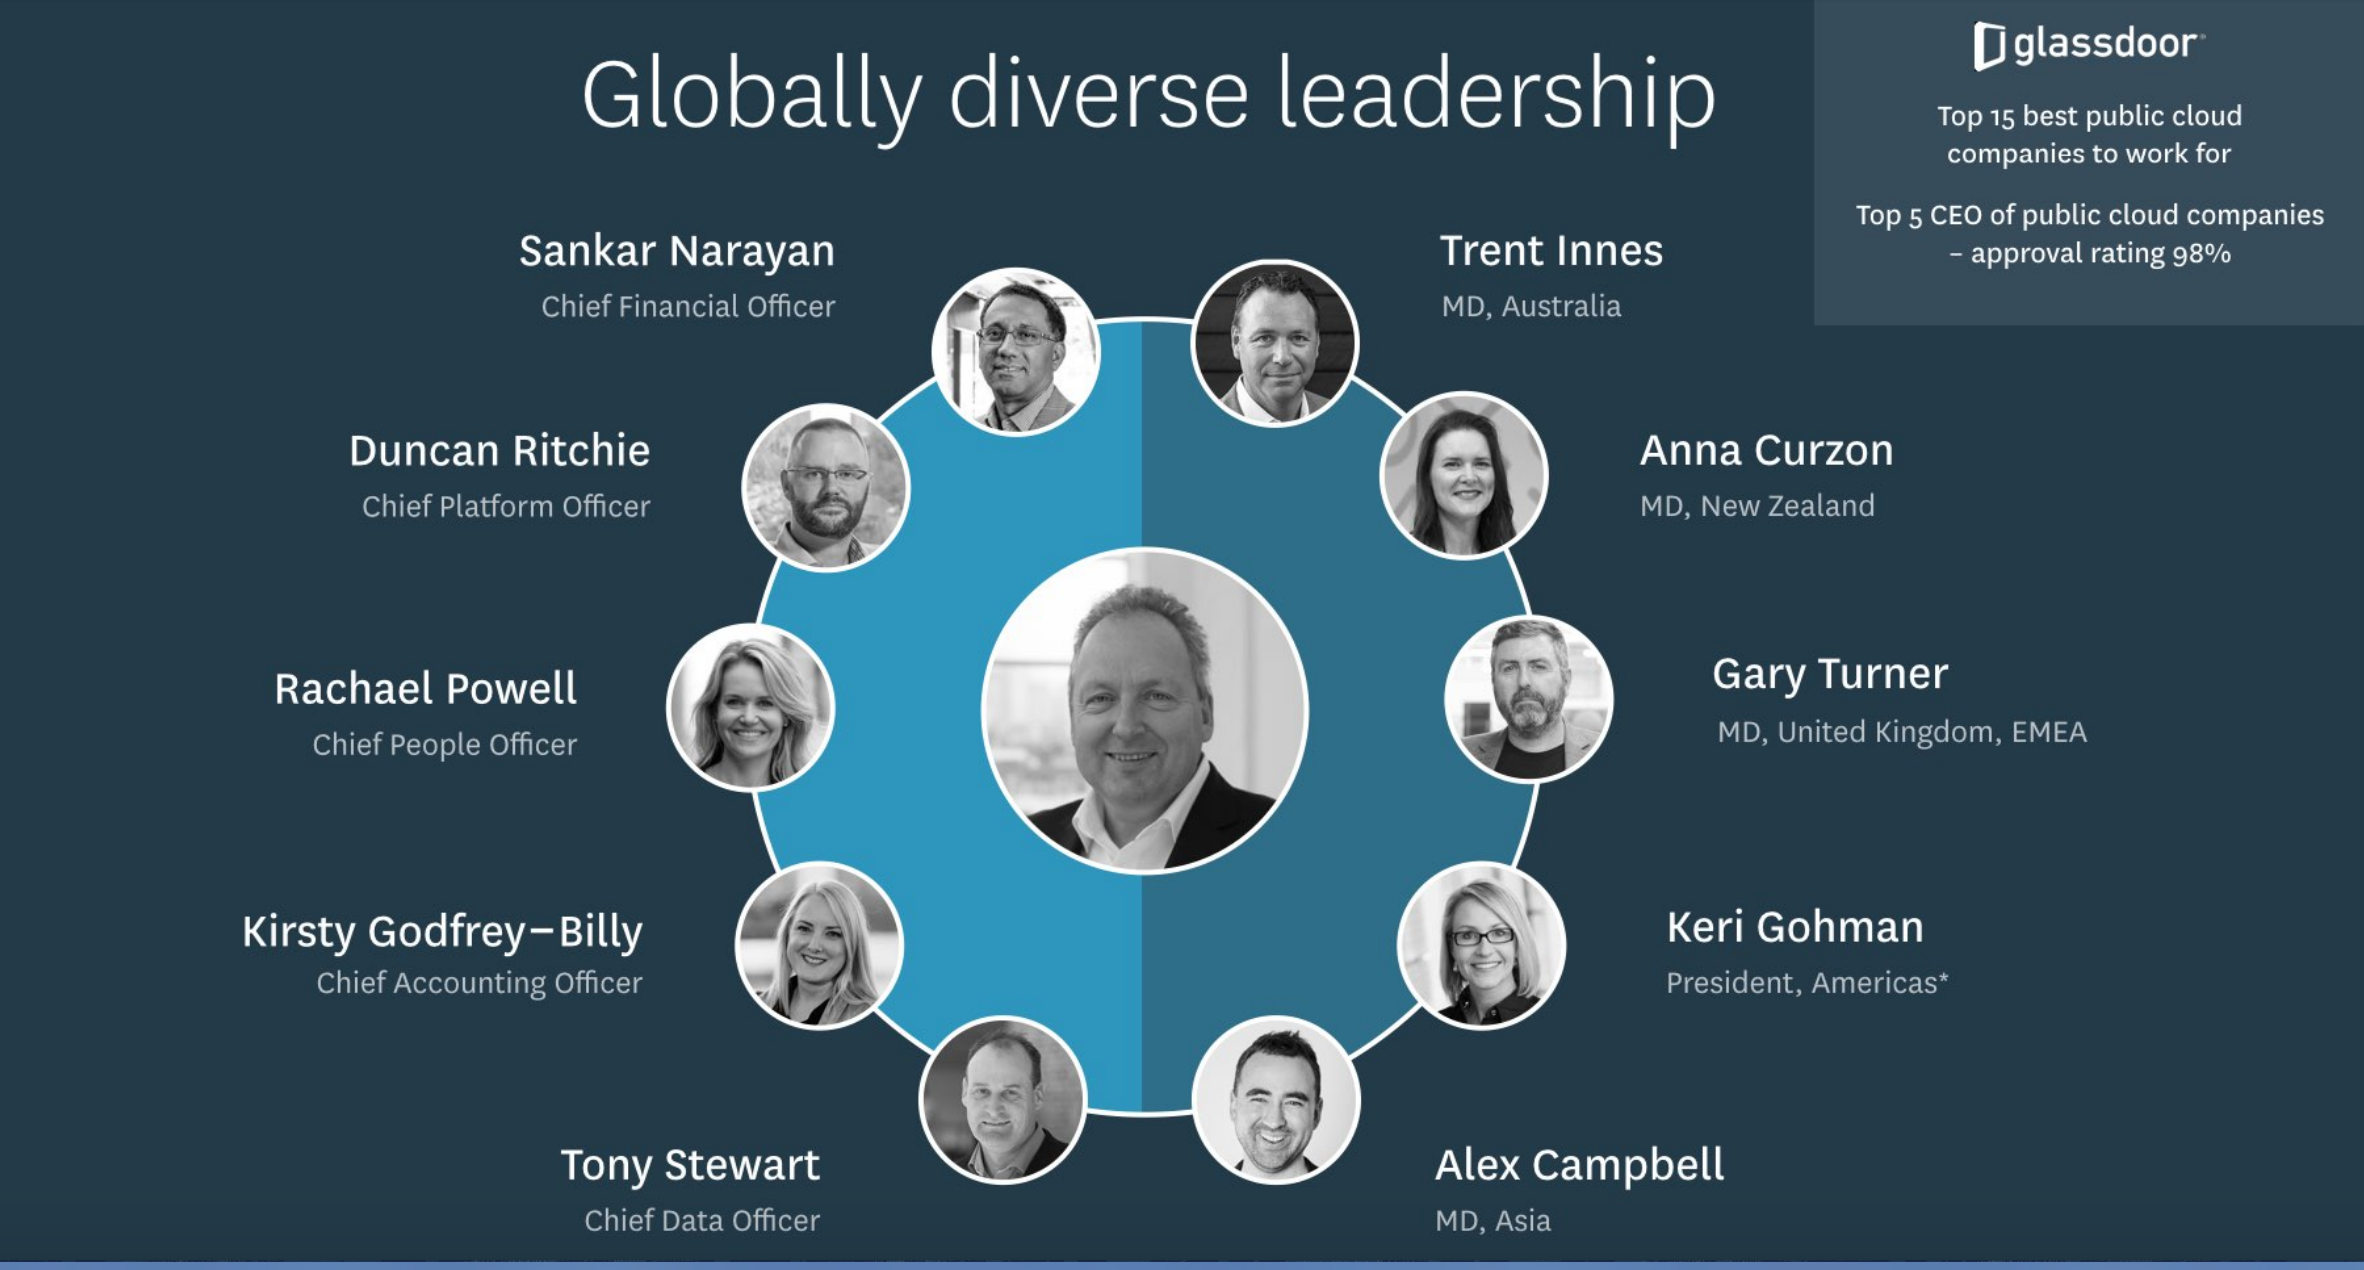 Diversity in the leadership team